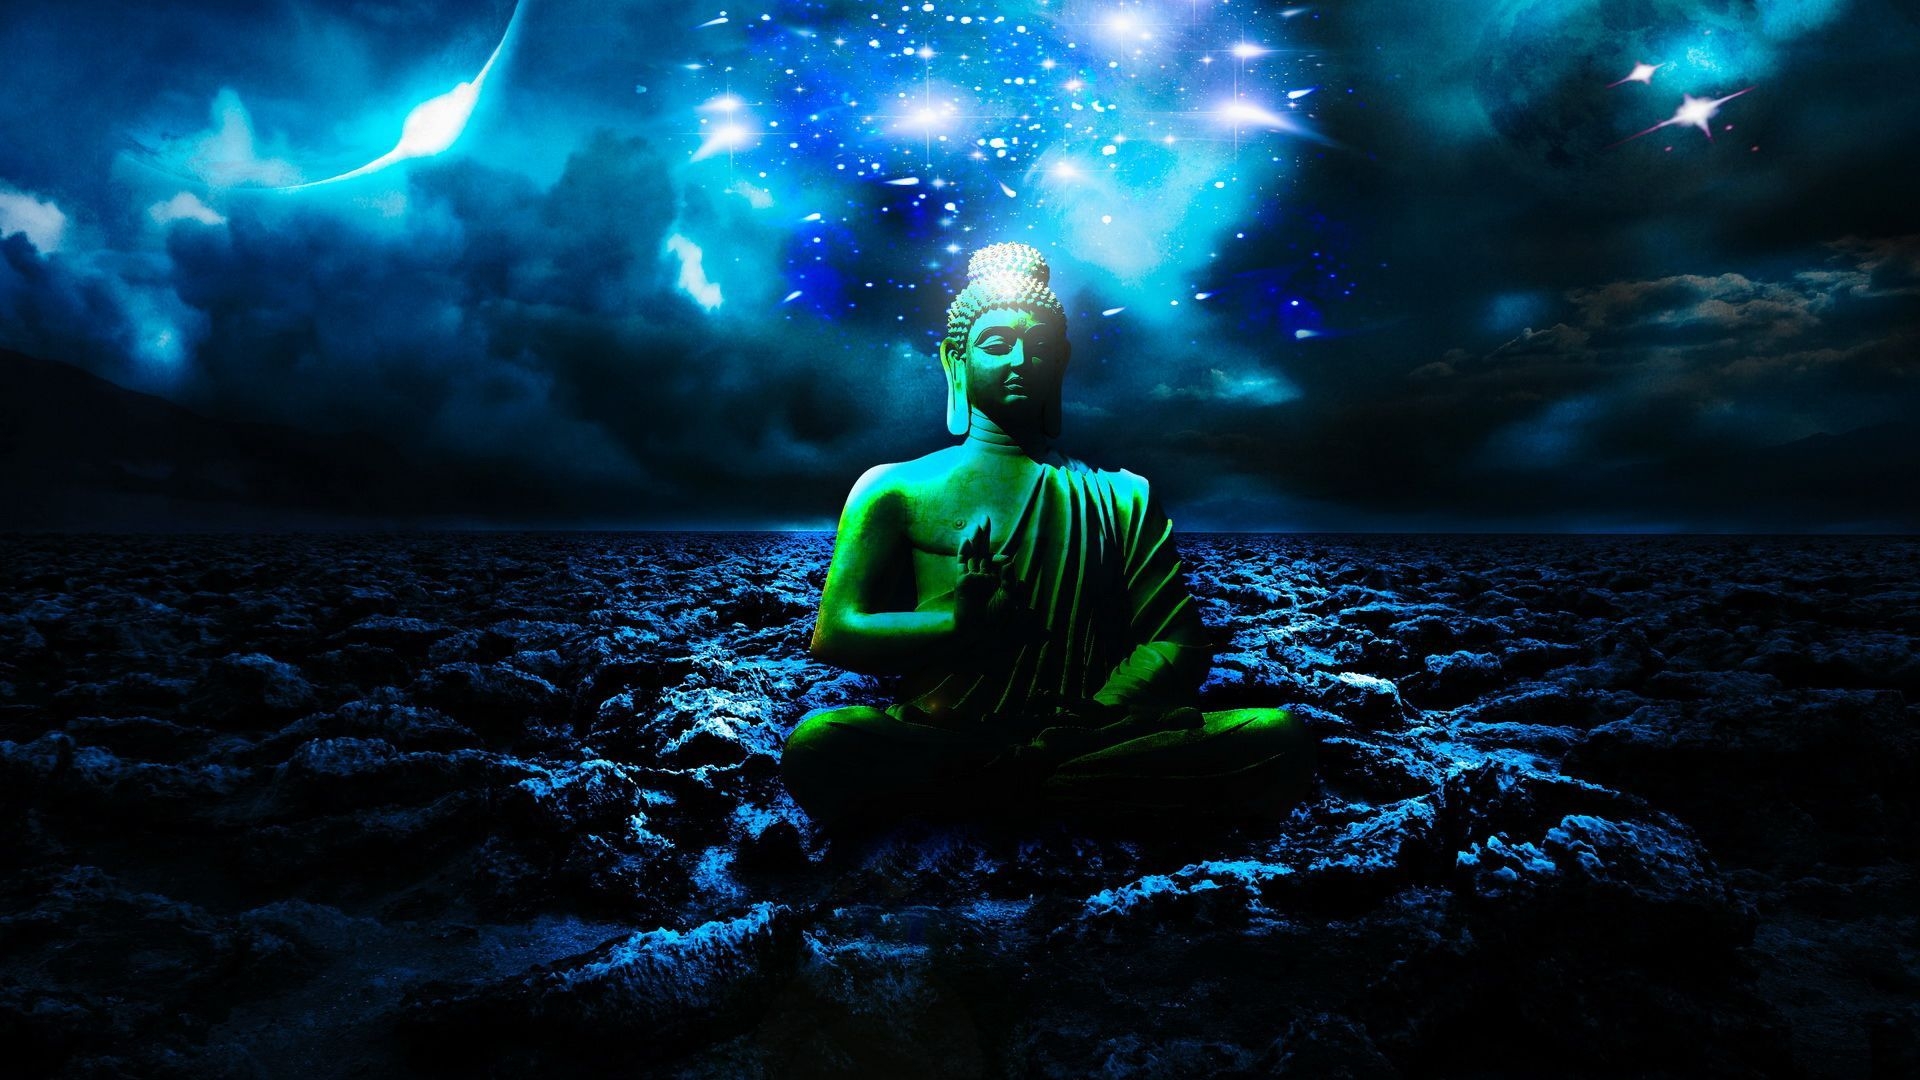 Bhagwan Buddha Photos Hd Free Download | Hindu Gods and Goddesses